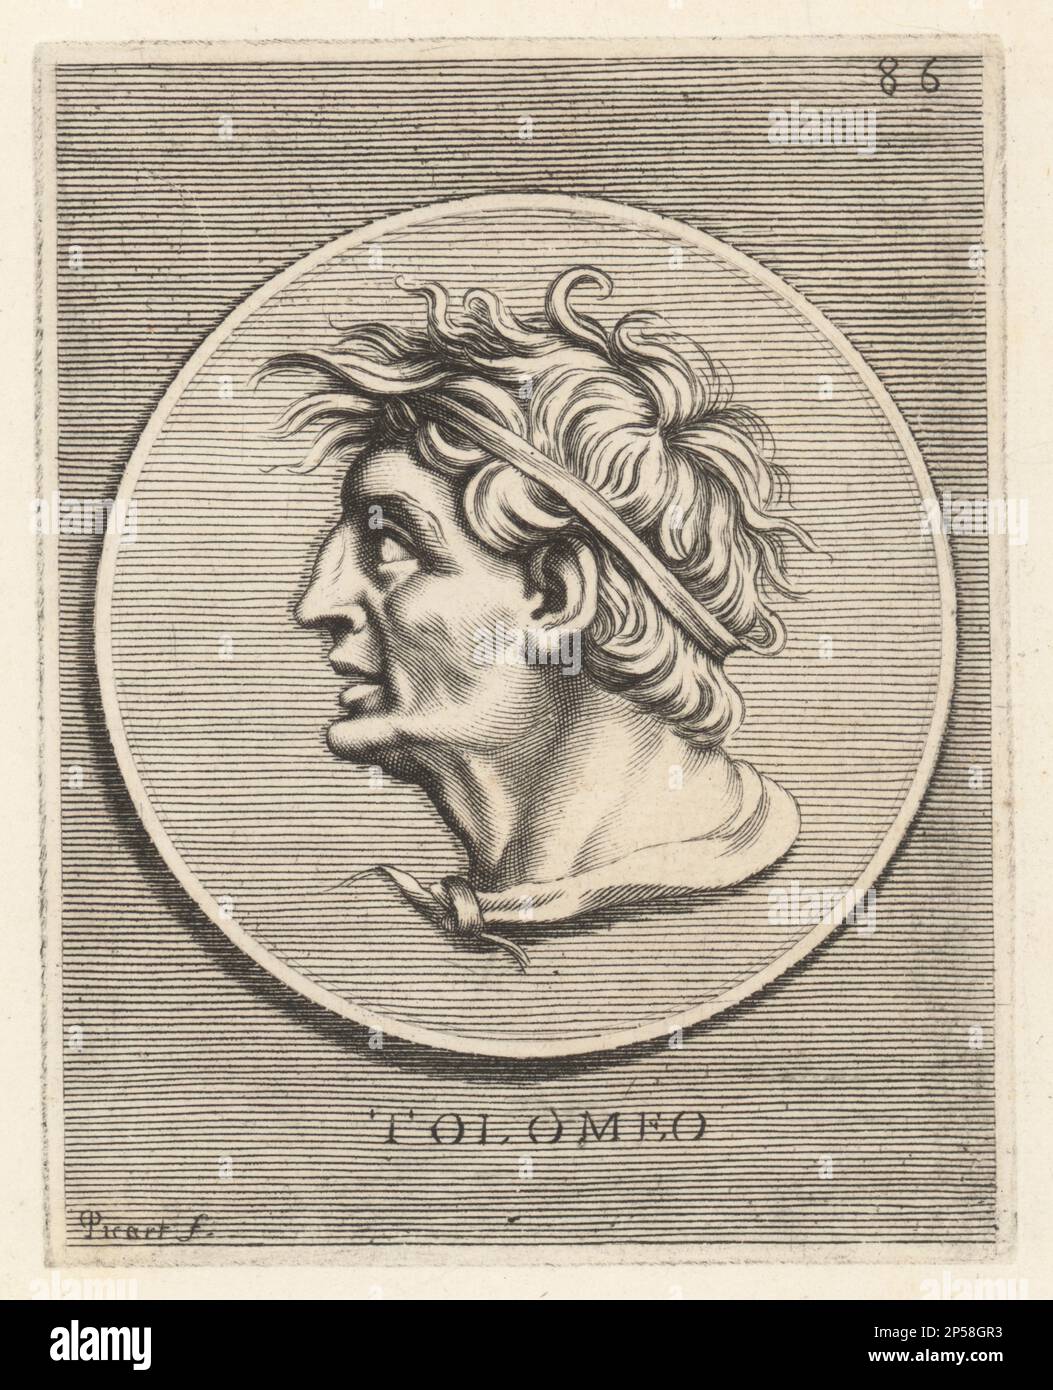 Ptolemy I Soter and Wife Eurydice (Illustration) - World History